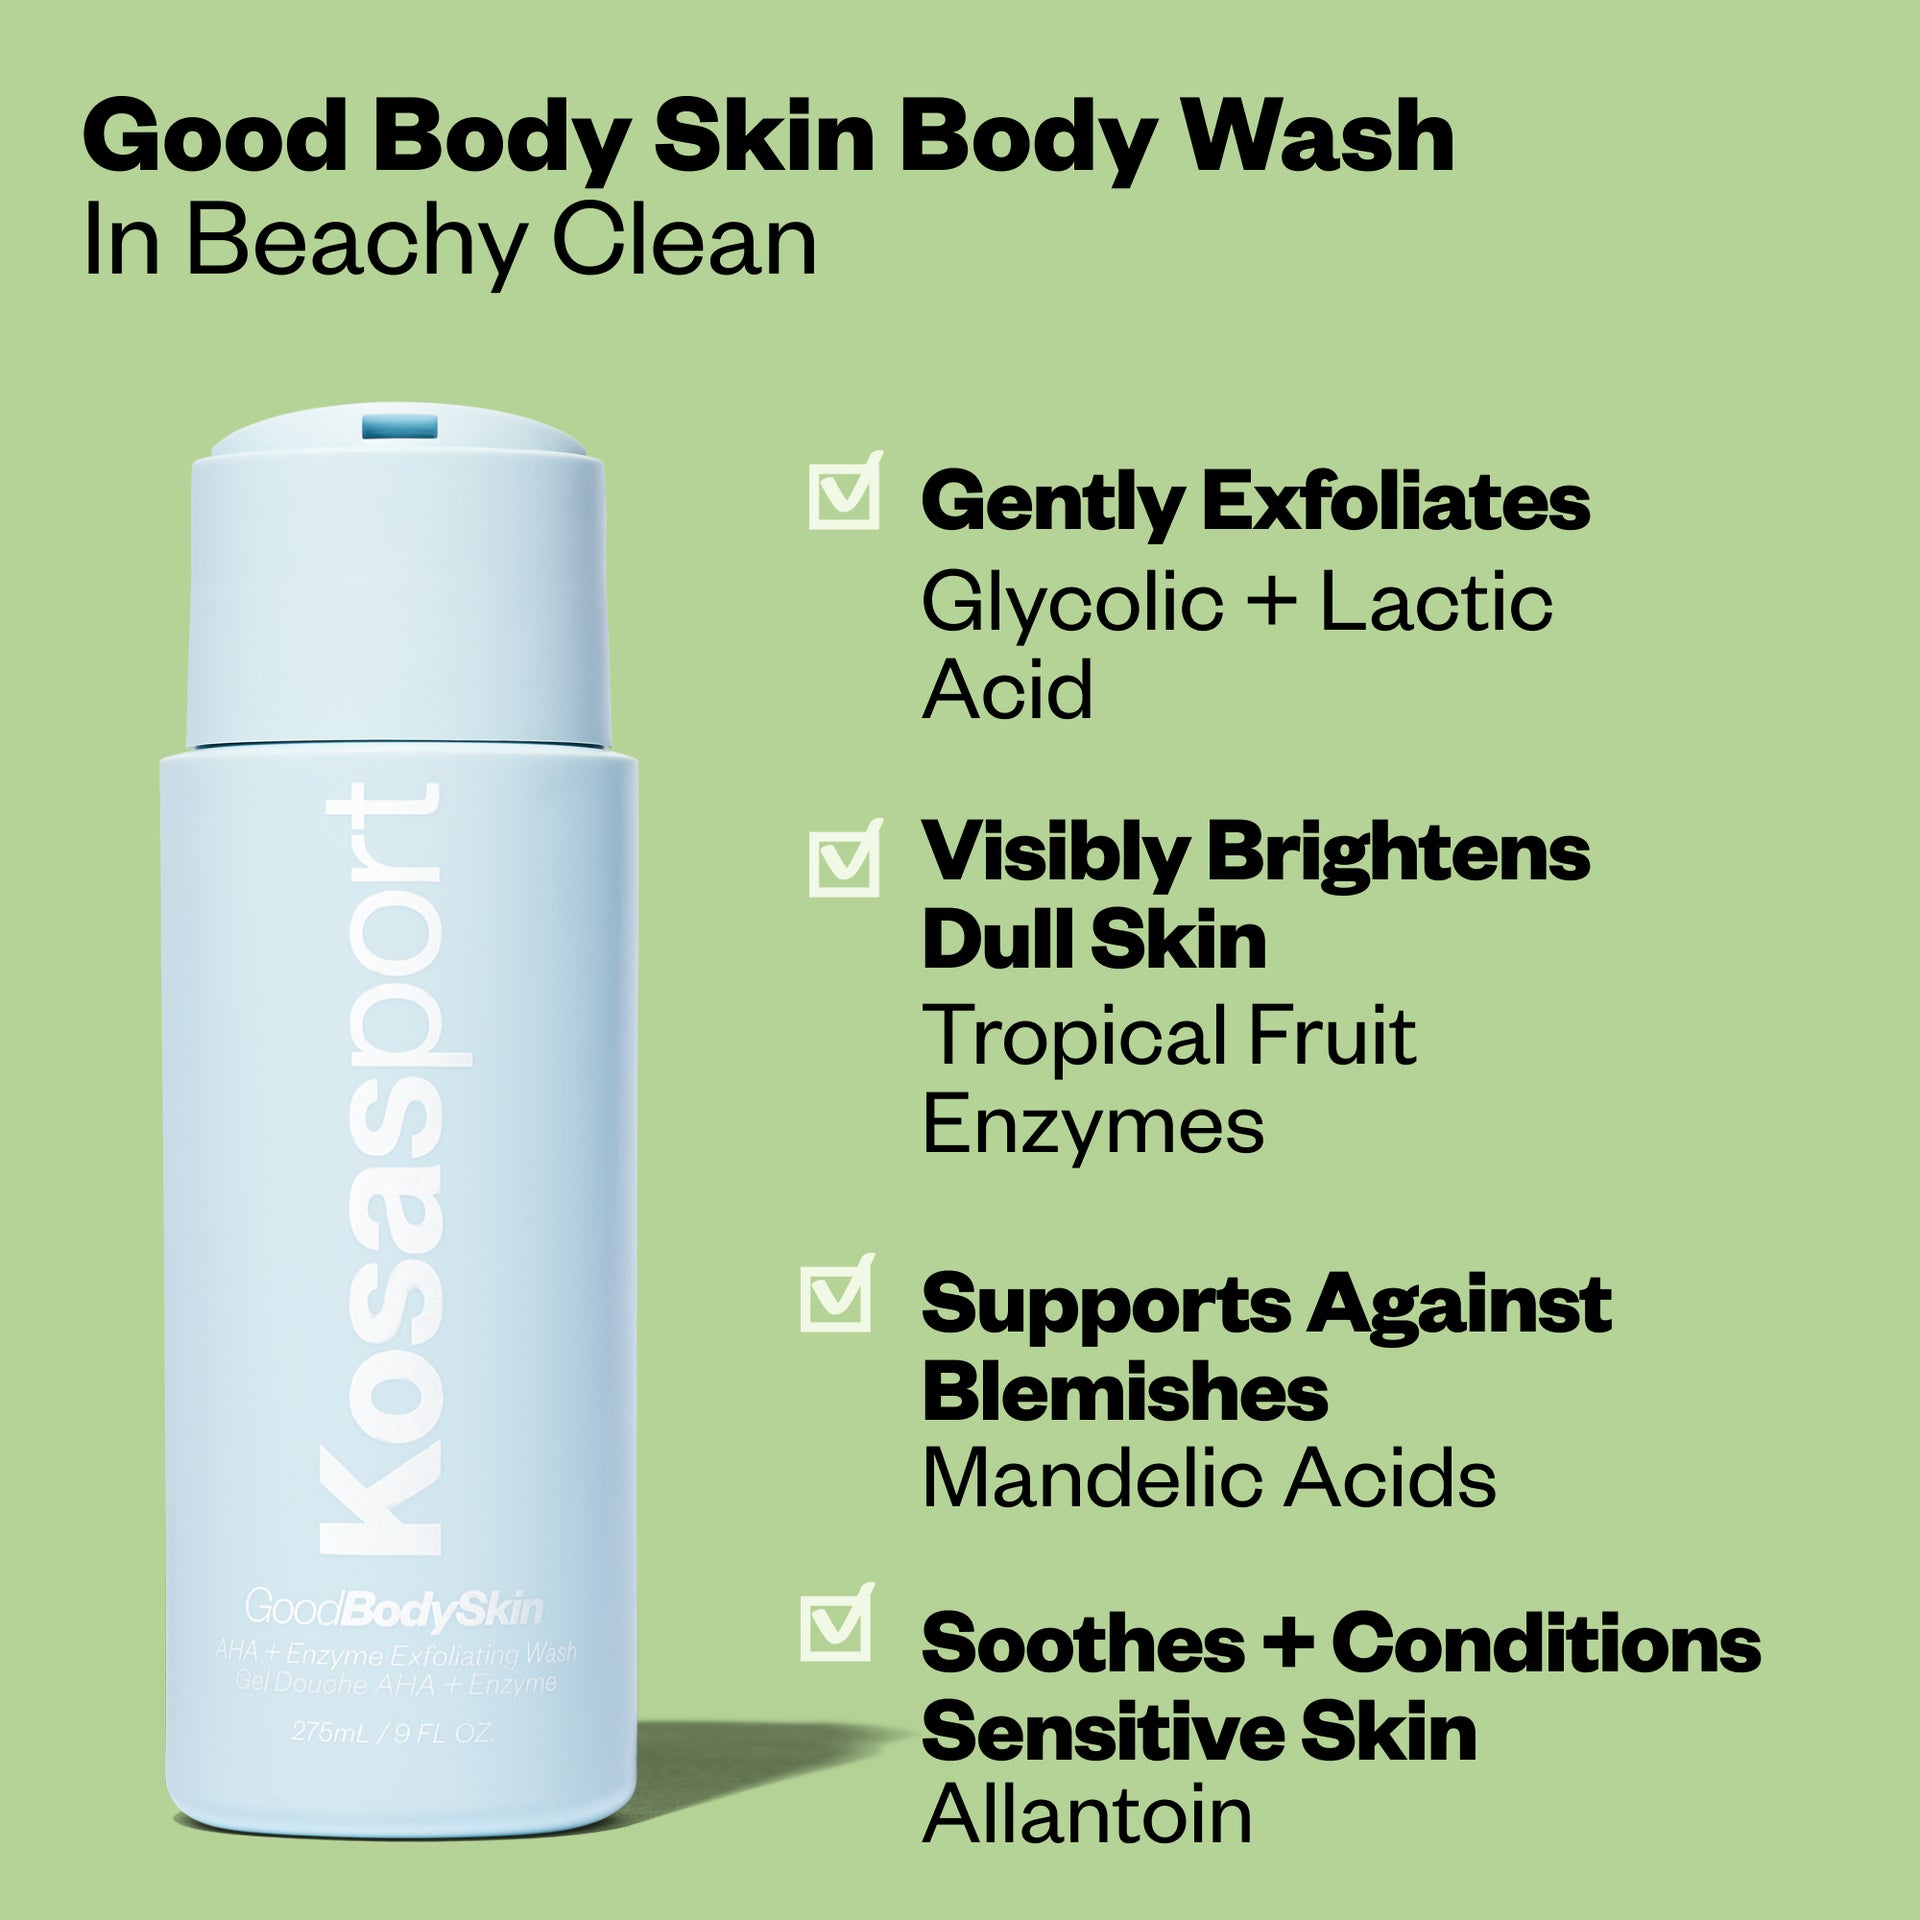 Good Body Skin Body Wash ingredients and benefits.